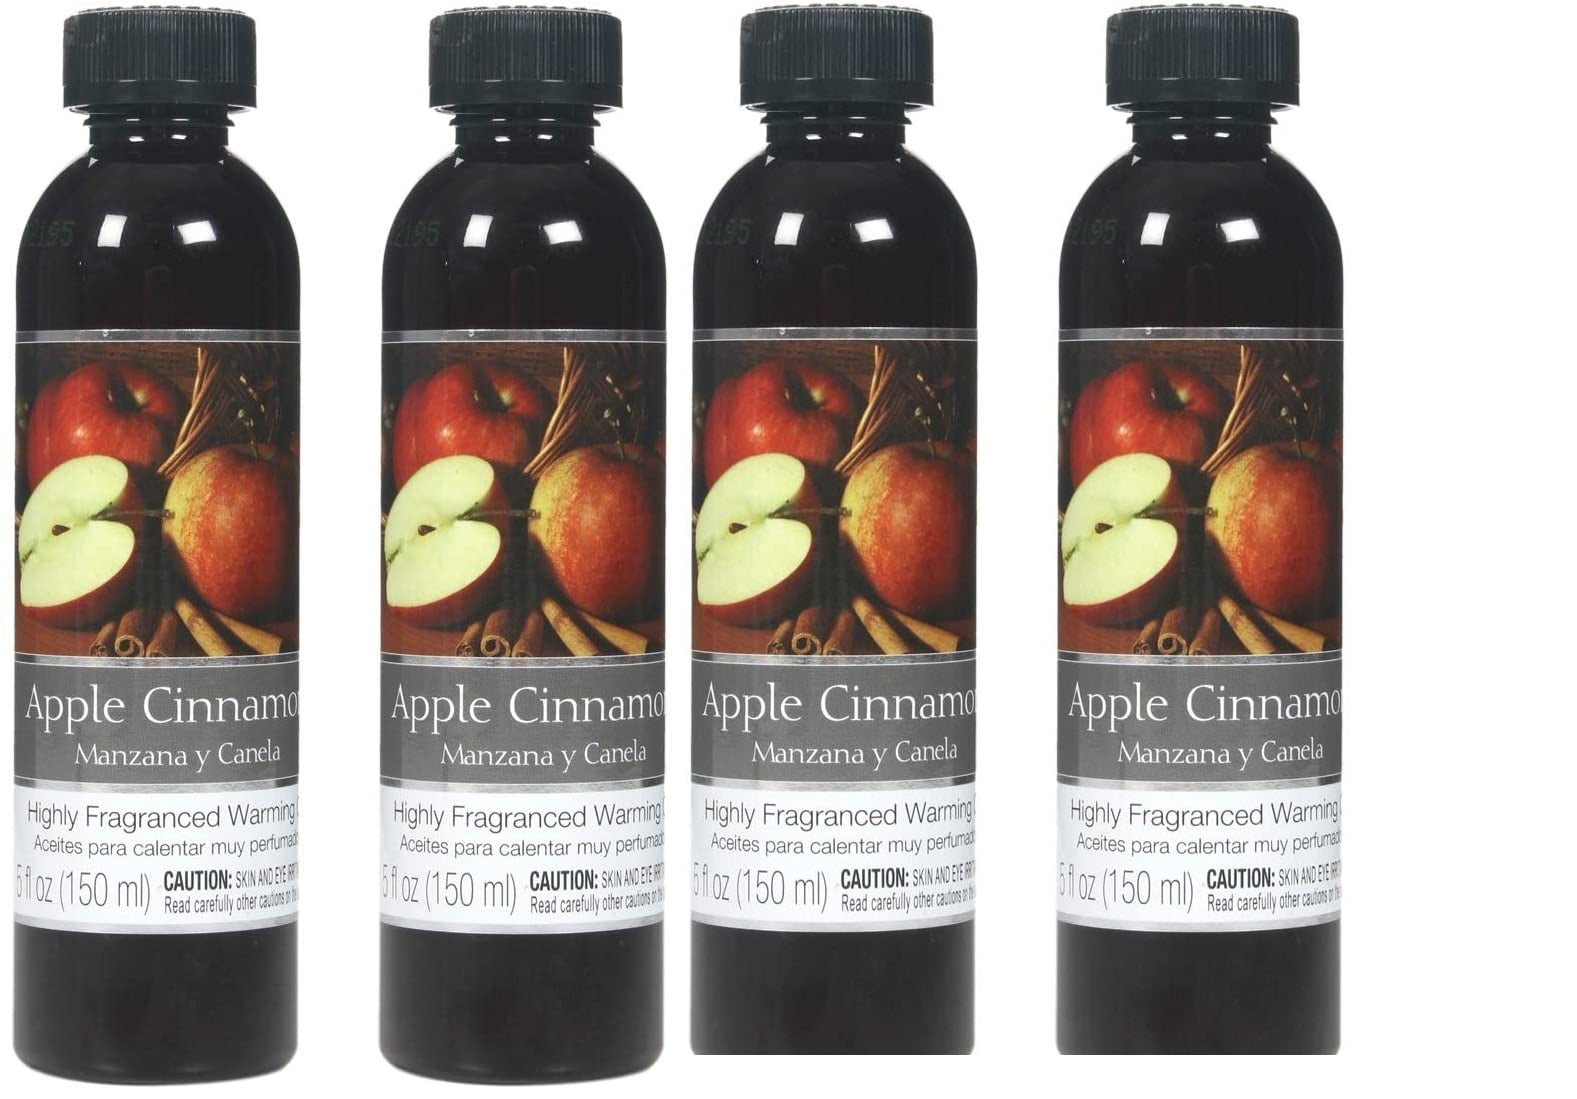 Hosley Set of 2, 5 oz Apple Cinnamon Fragrance Warming Oils